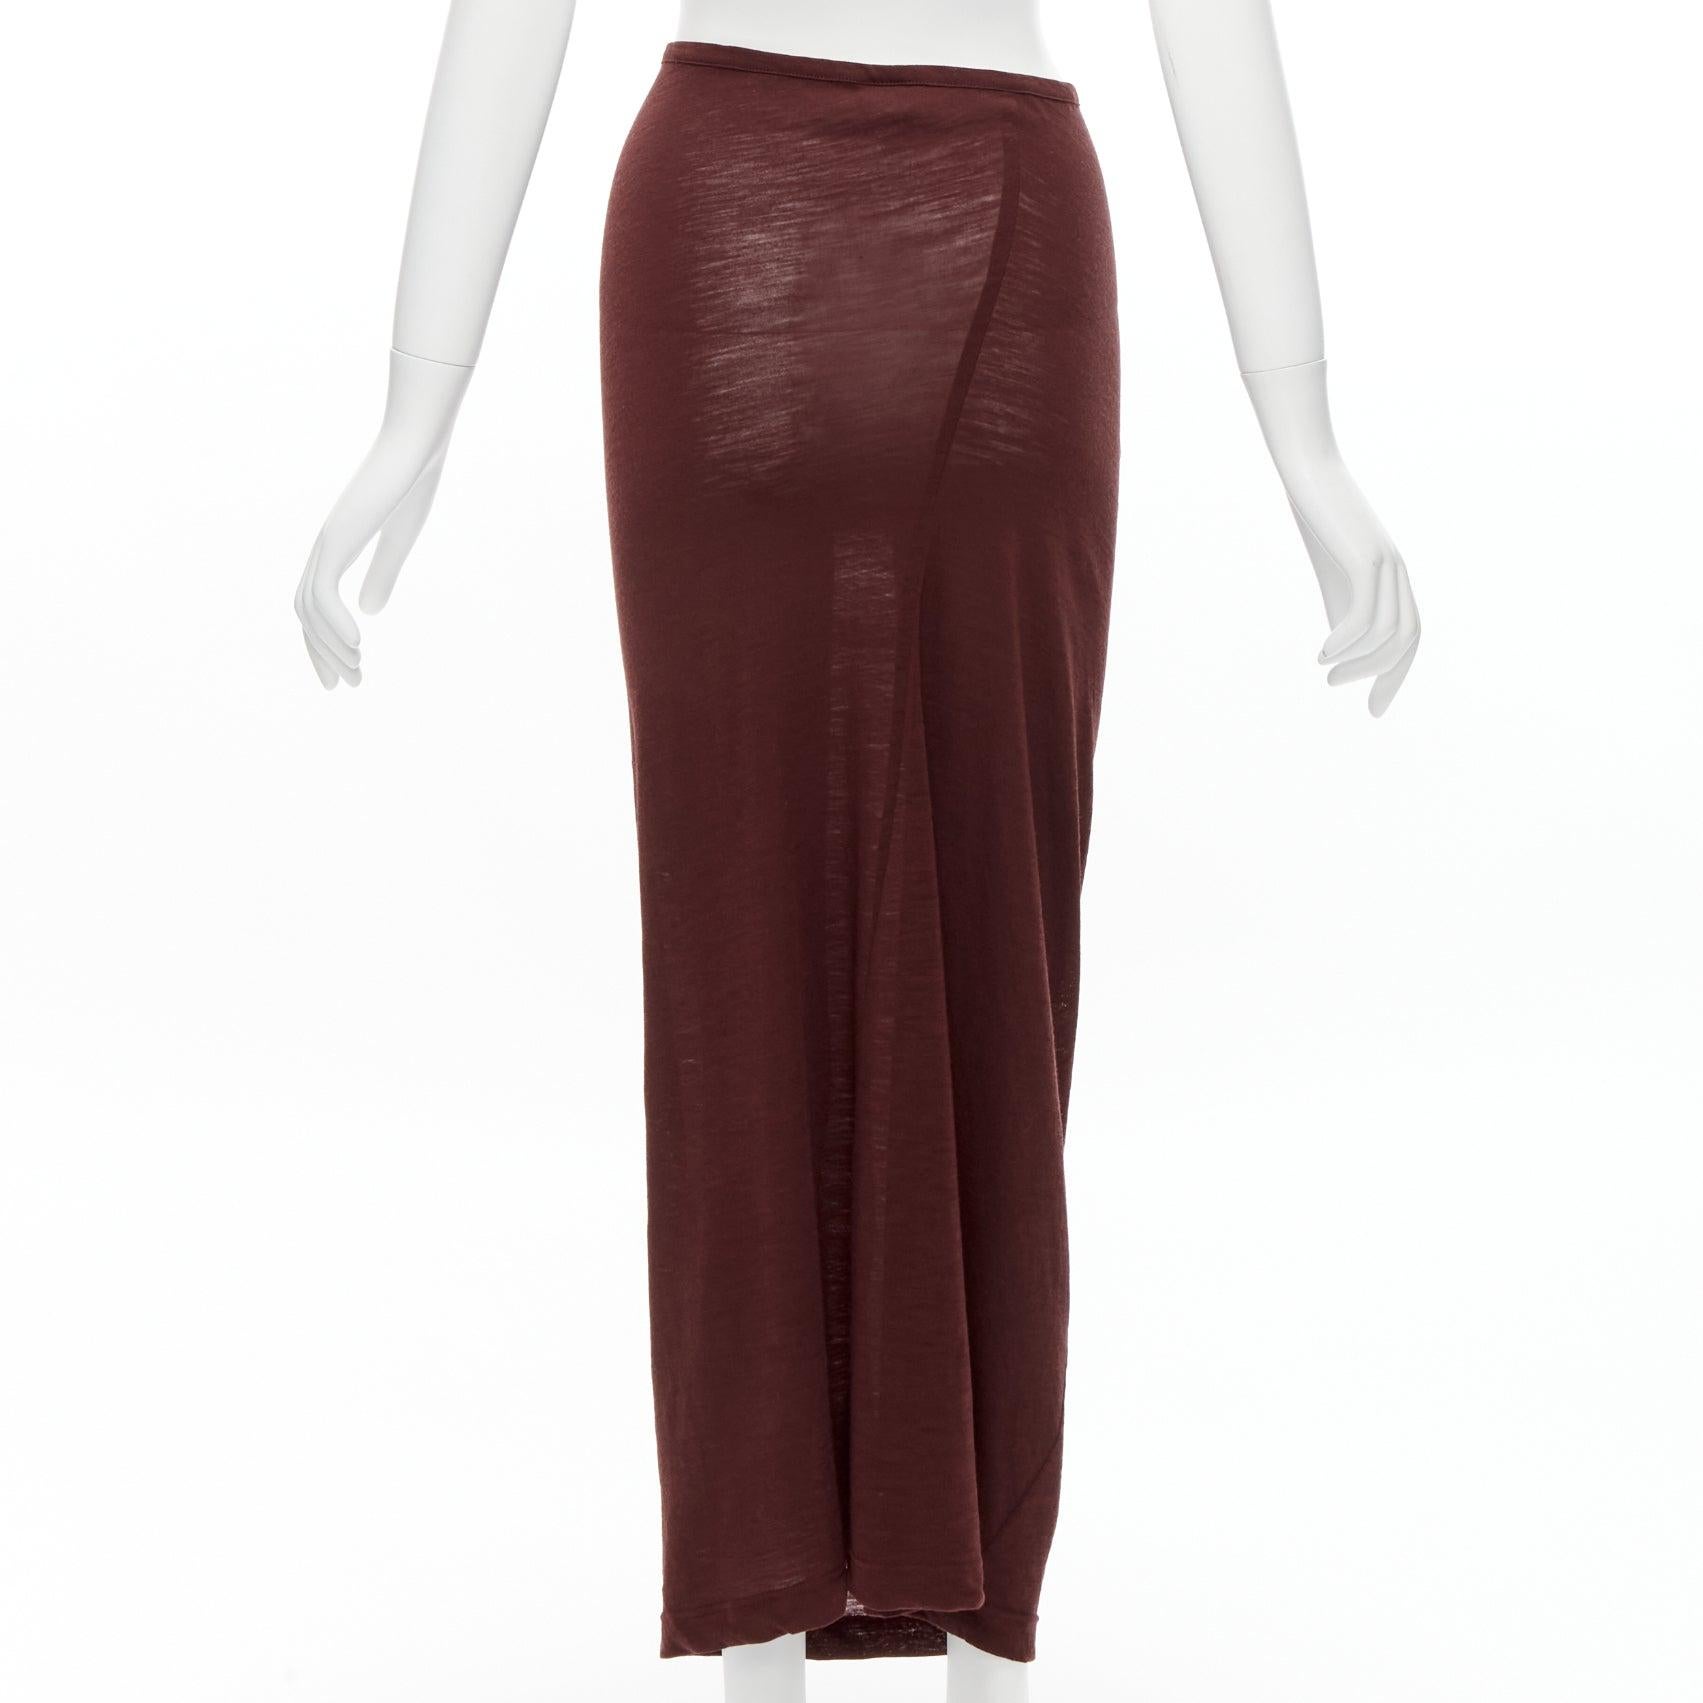 CDG COMME DES GARCONS burgundy brown bias cut stretch top midi skirt set S For Sale 7